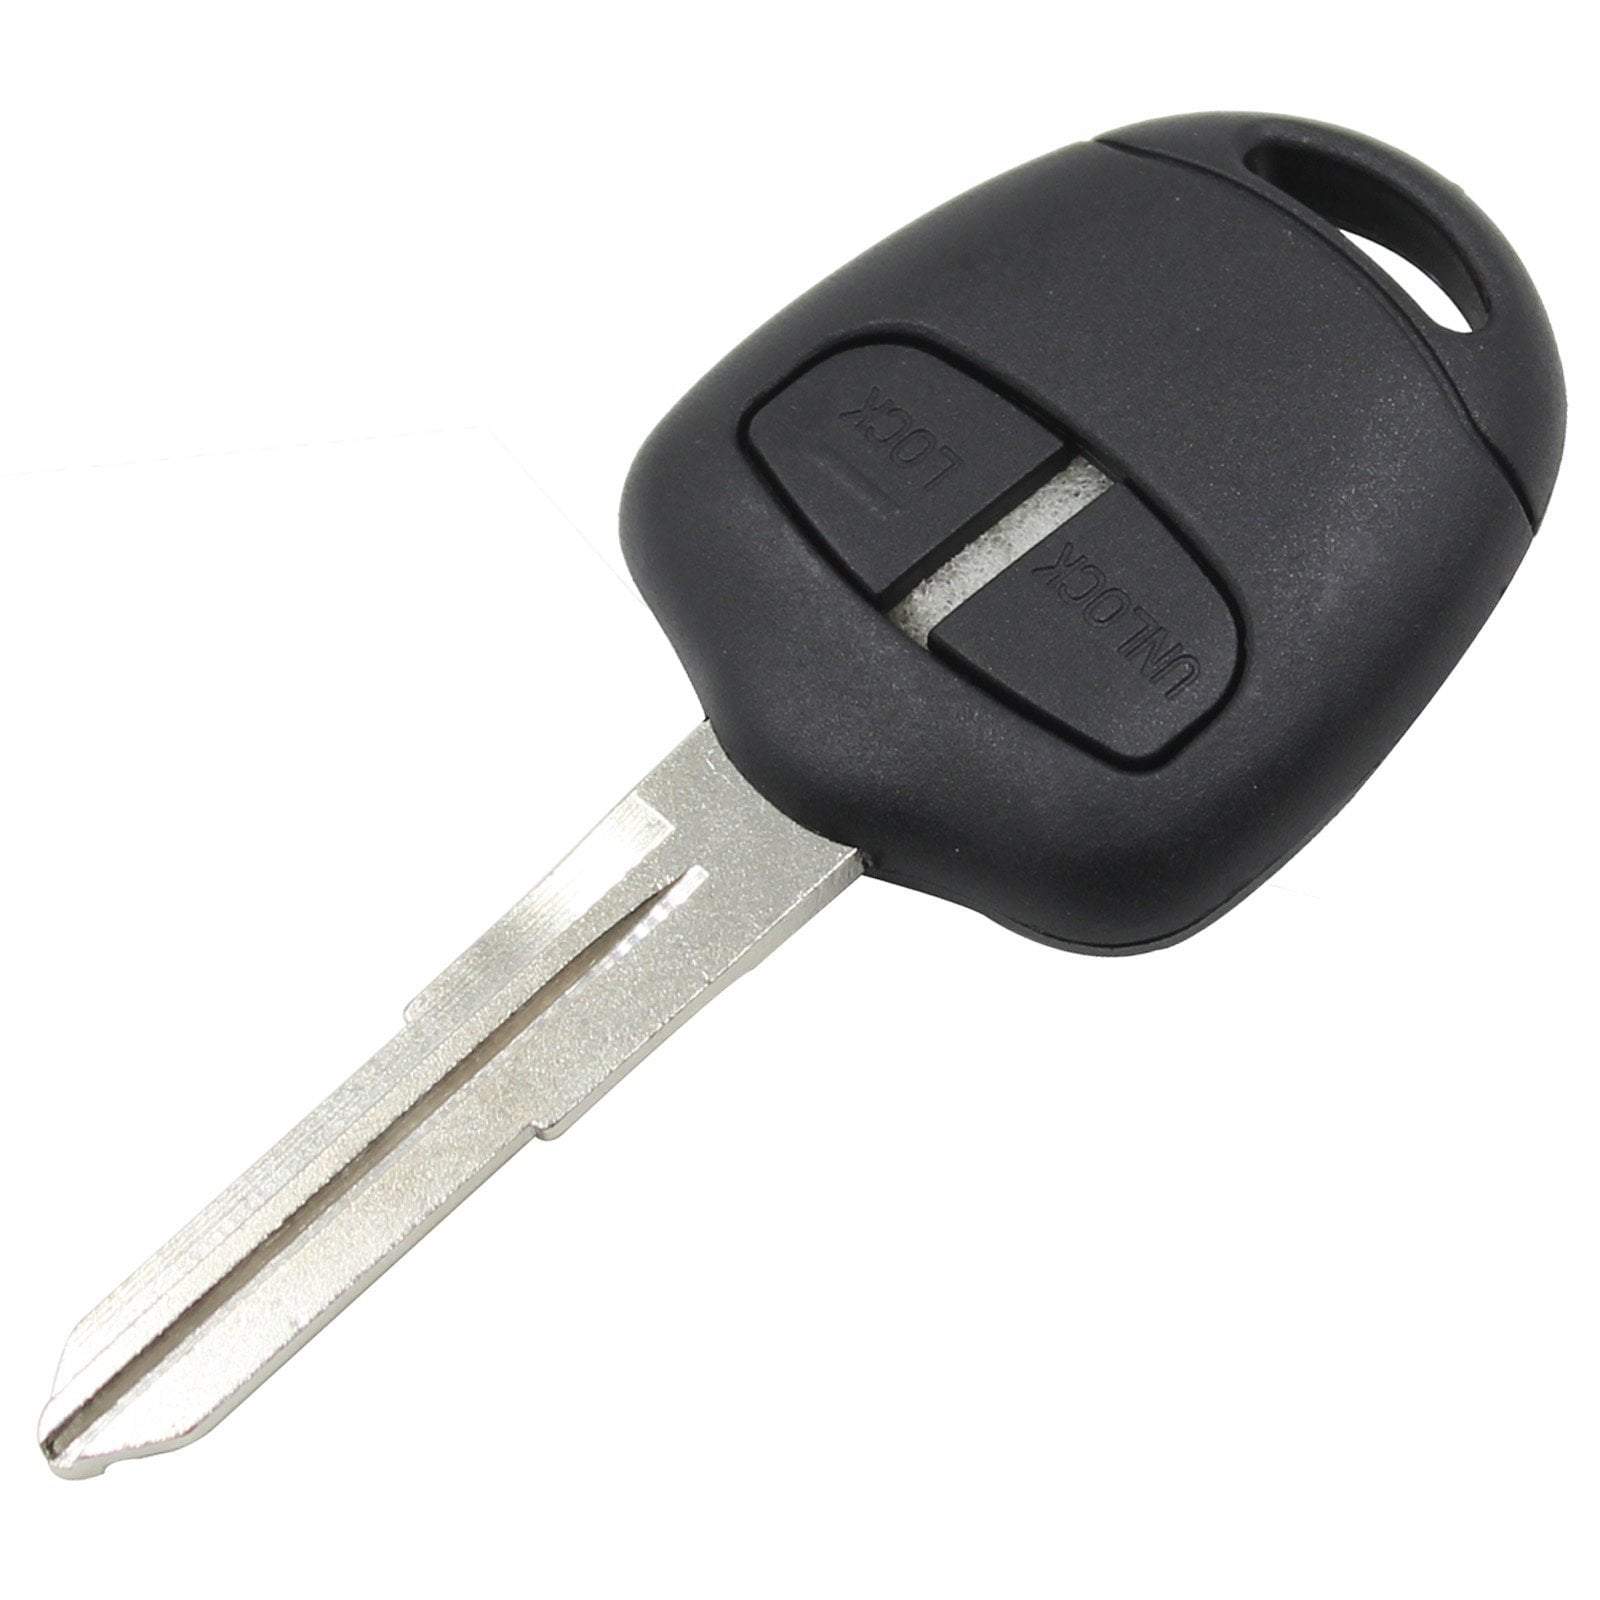 Fekete színű, 2 gombos Mitsubishi kulcs, kulcsház.